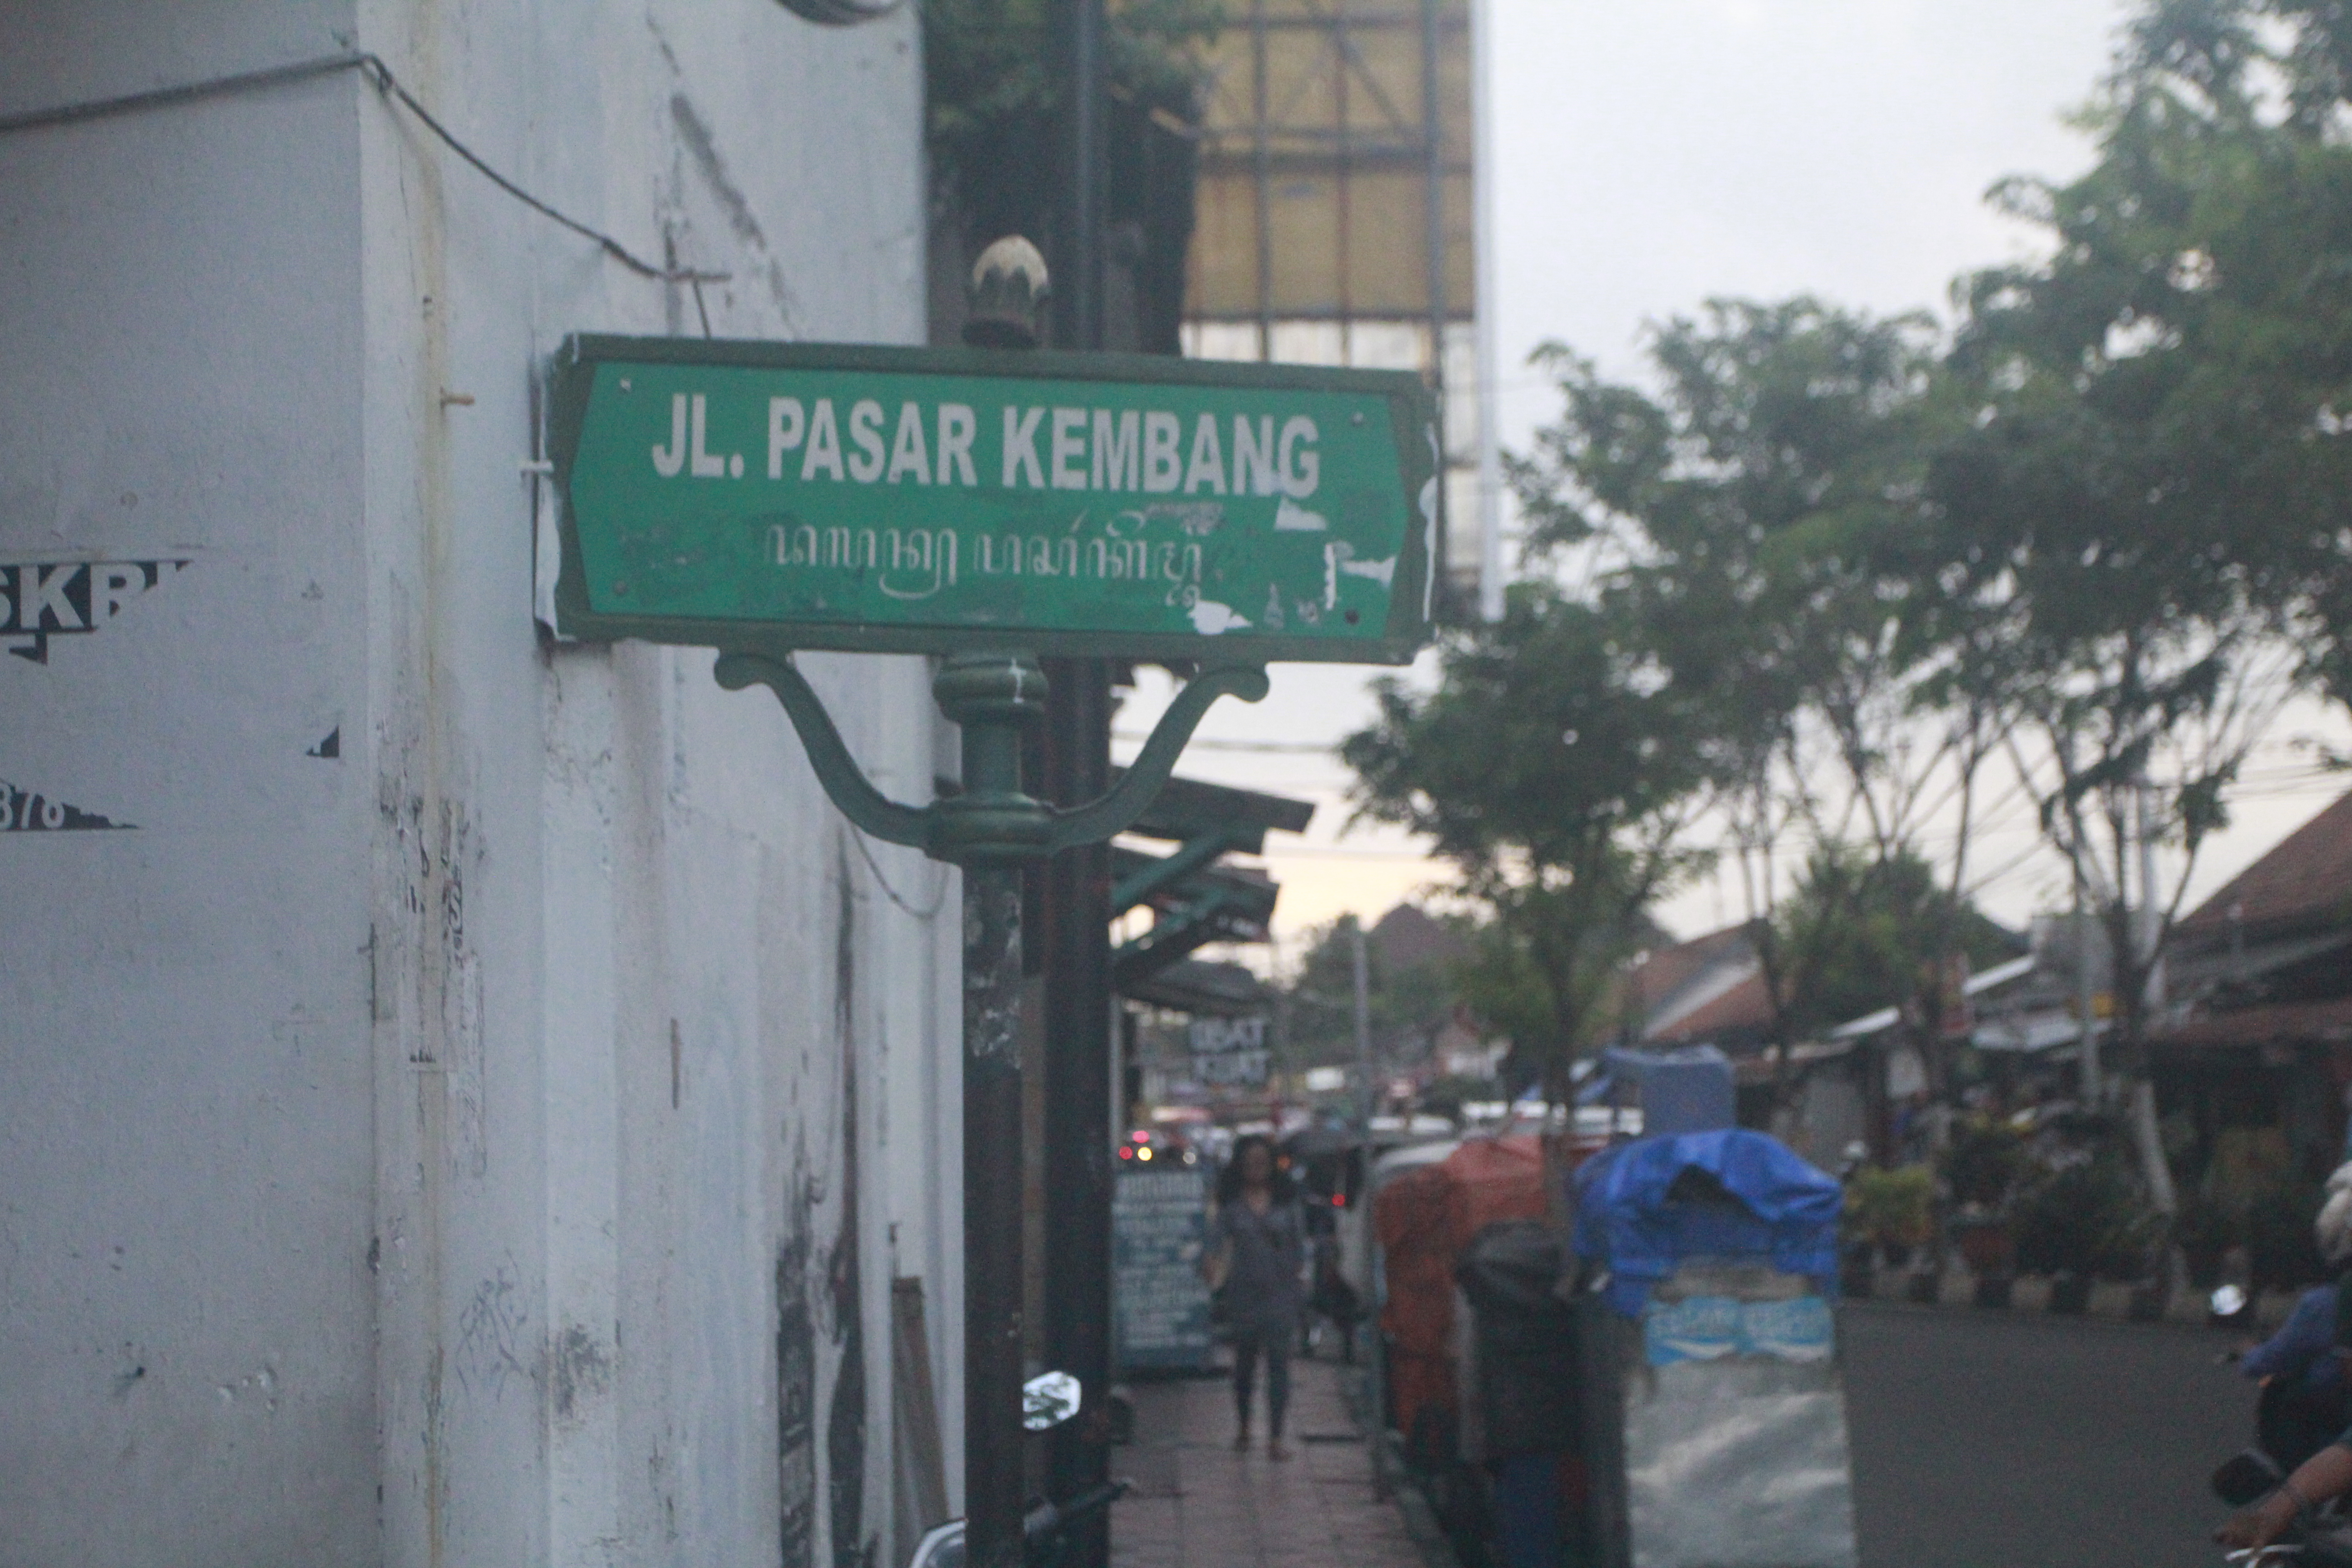 Dulu, Jalan Pasar Kembang merupakan sentra pedagang bunga, sebelum pindah ke Jalan Ahmad Jazuli. Sekarang nama Pasar Kembang cukup identik dengan kawasan prostitusi, akibat kegiatan yang terjadi di gang-gang selatan jalan ini.